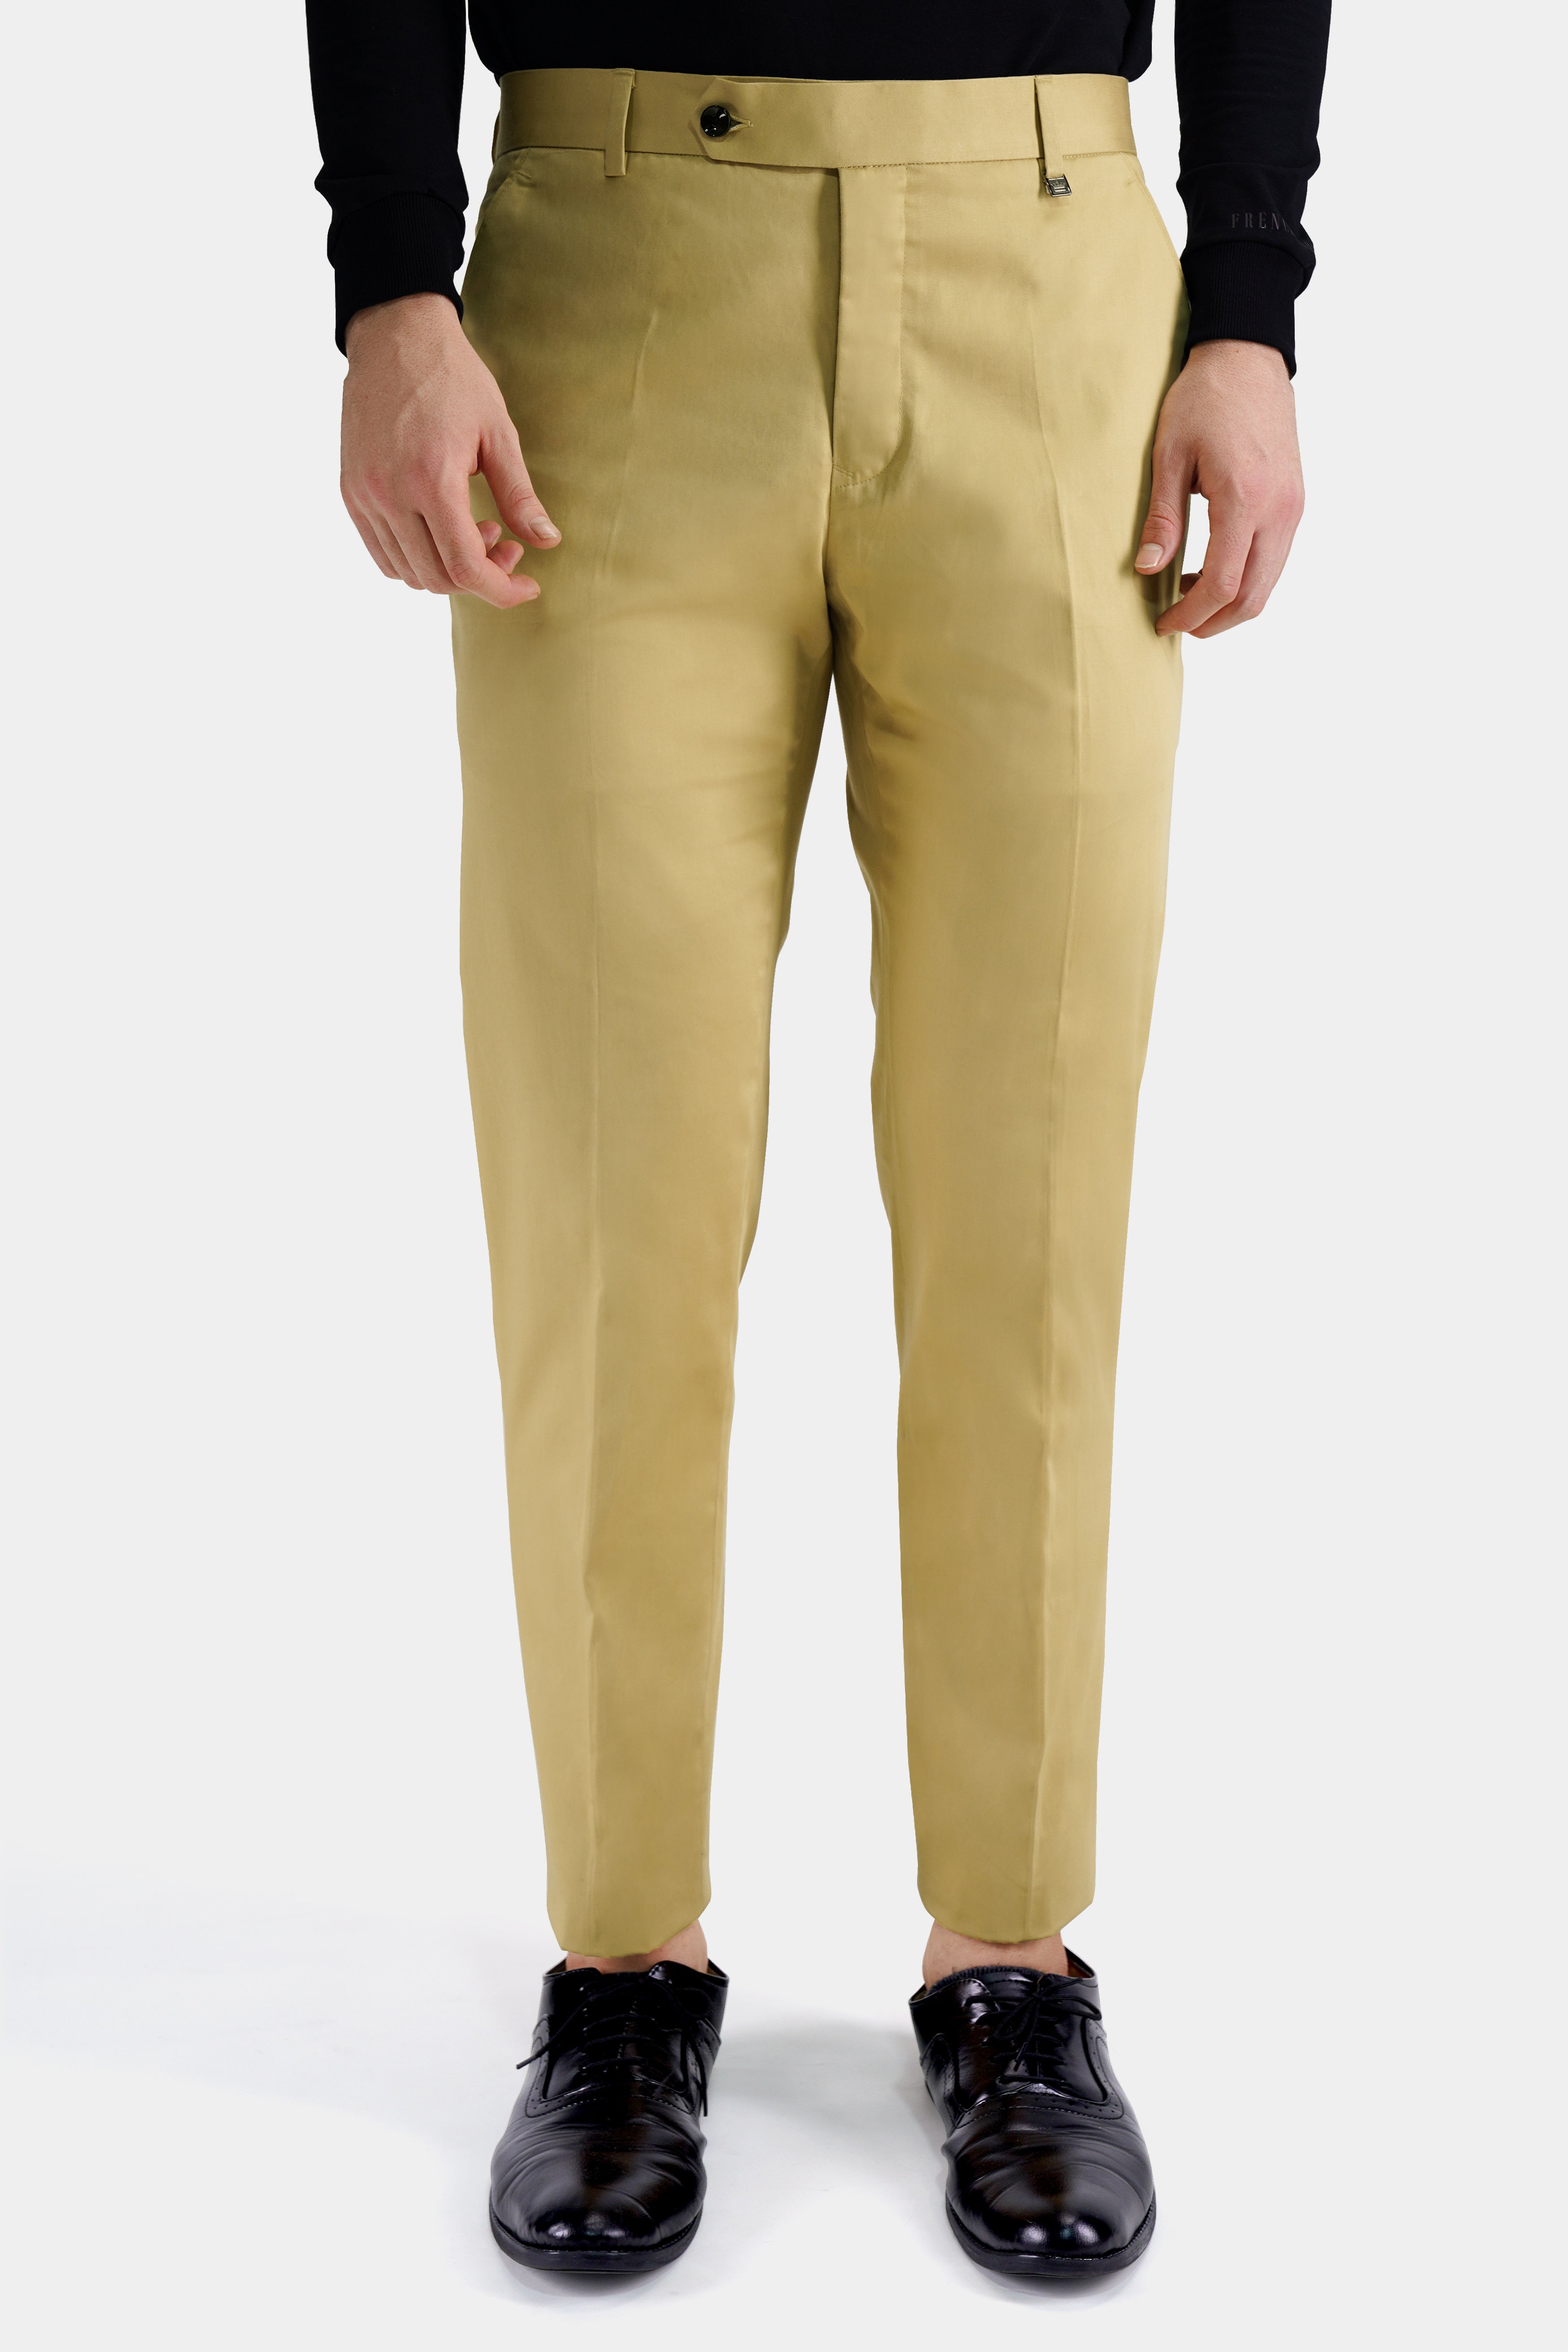 Lands End Womens Pants Size 18 Mid Rise Slim Leg Light Yellow Very Cute  Pants | eBay